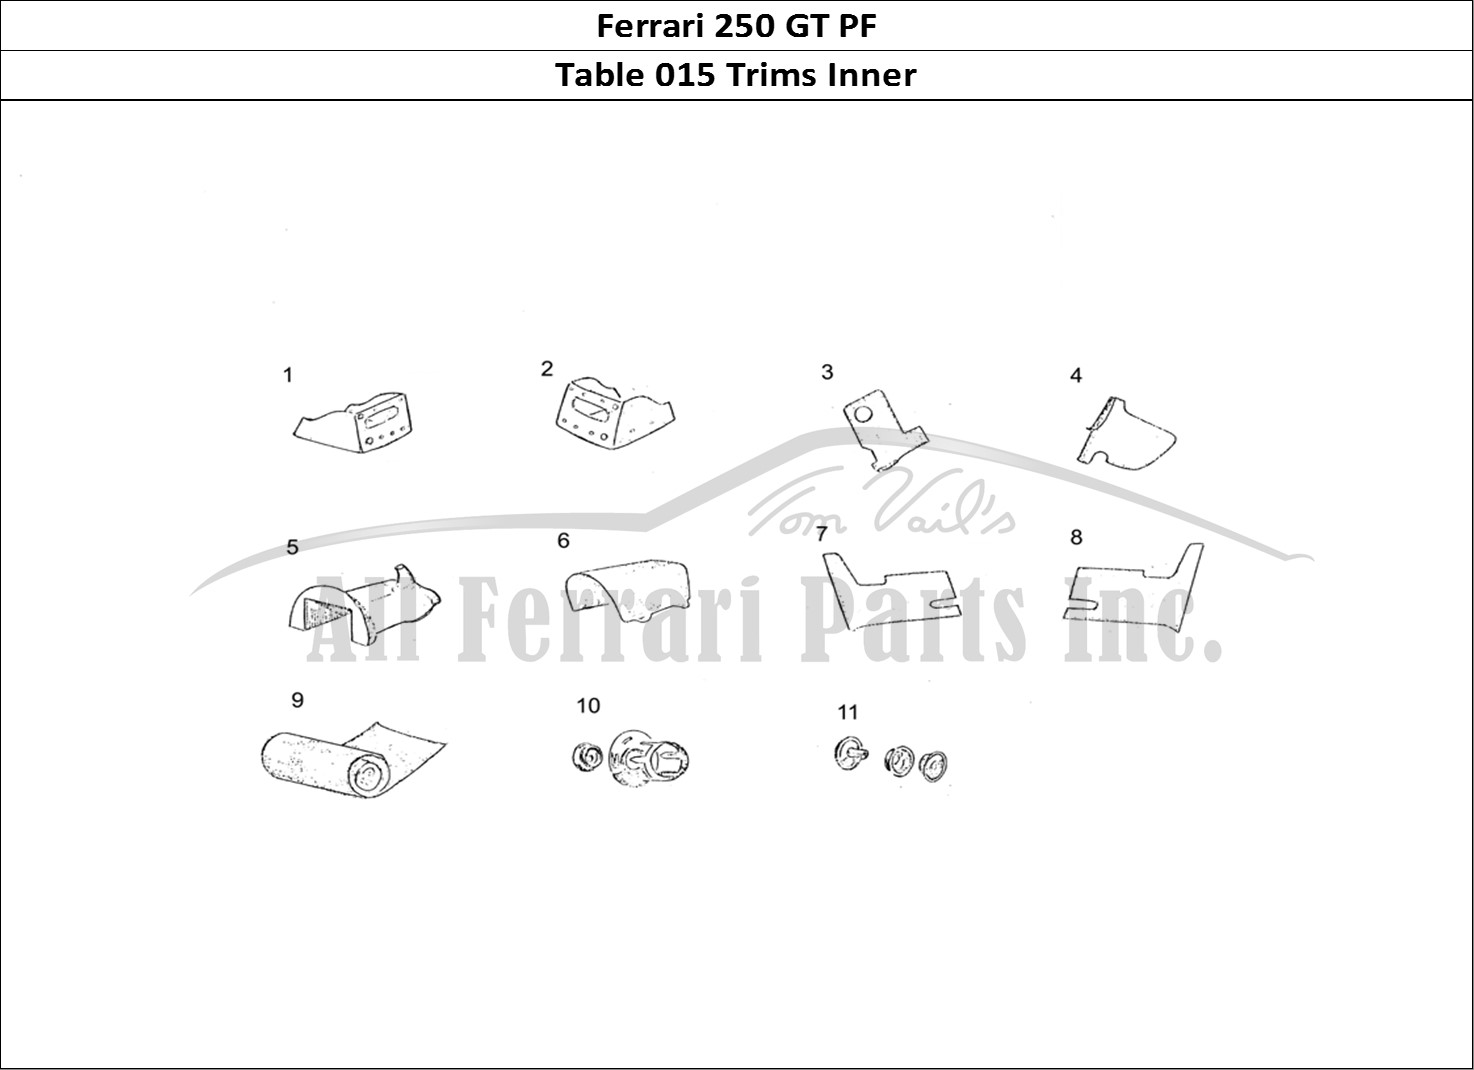 Ferrari Parts Ferrari 250 GT (Coachwork) Page 015 Inner Trims